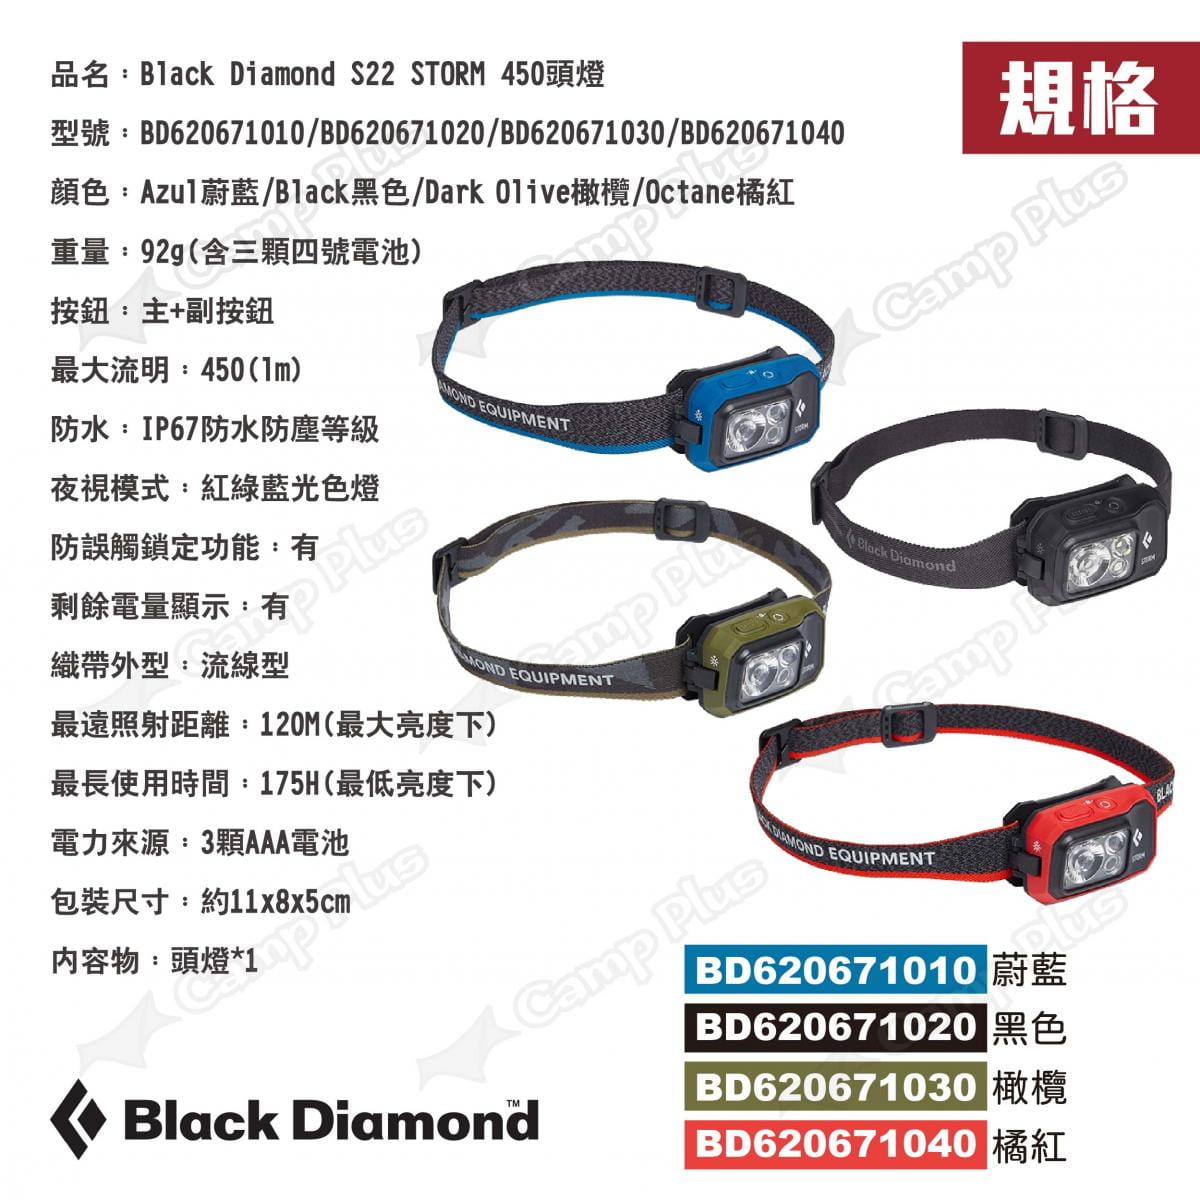 【Black Diamond】STORM 450頭燈S22 多色可選 悠遊戶外 9